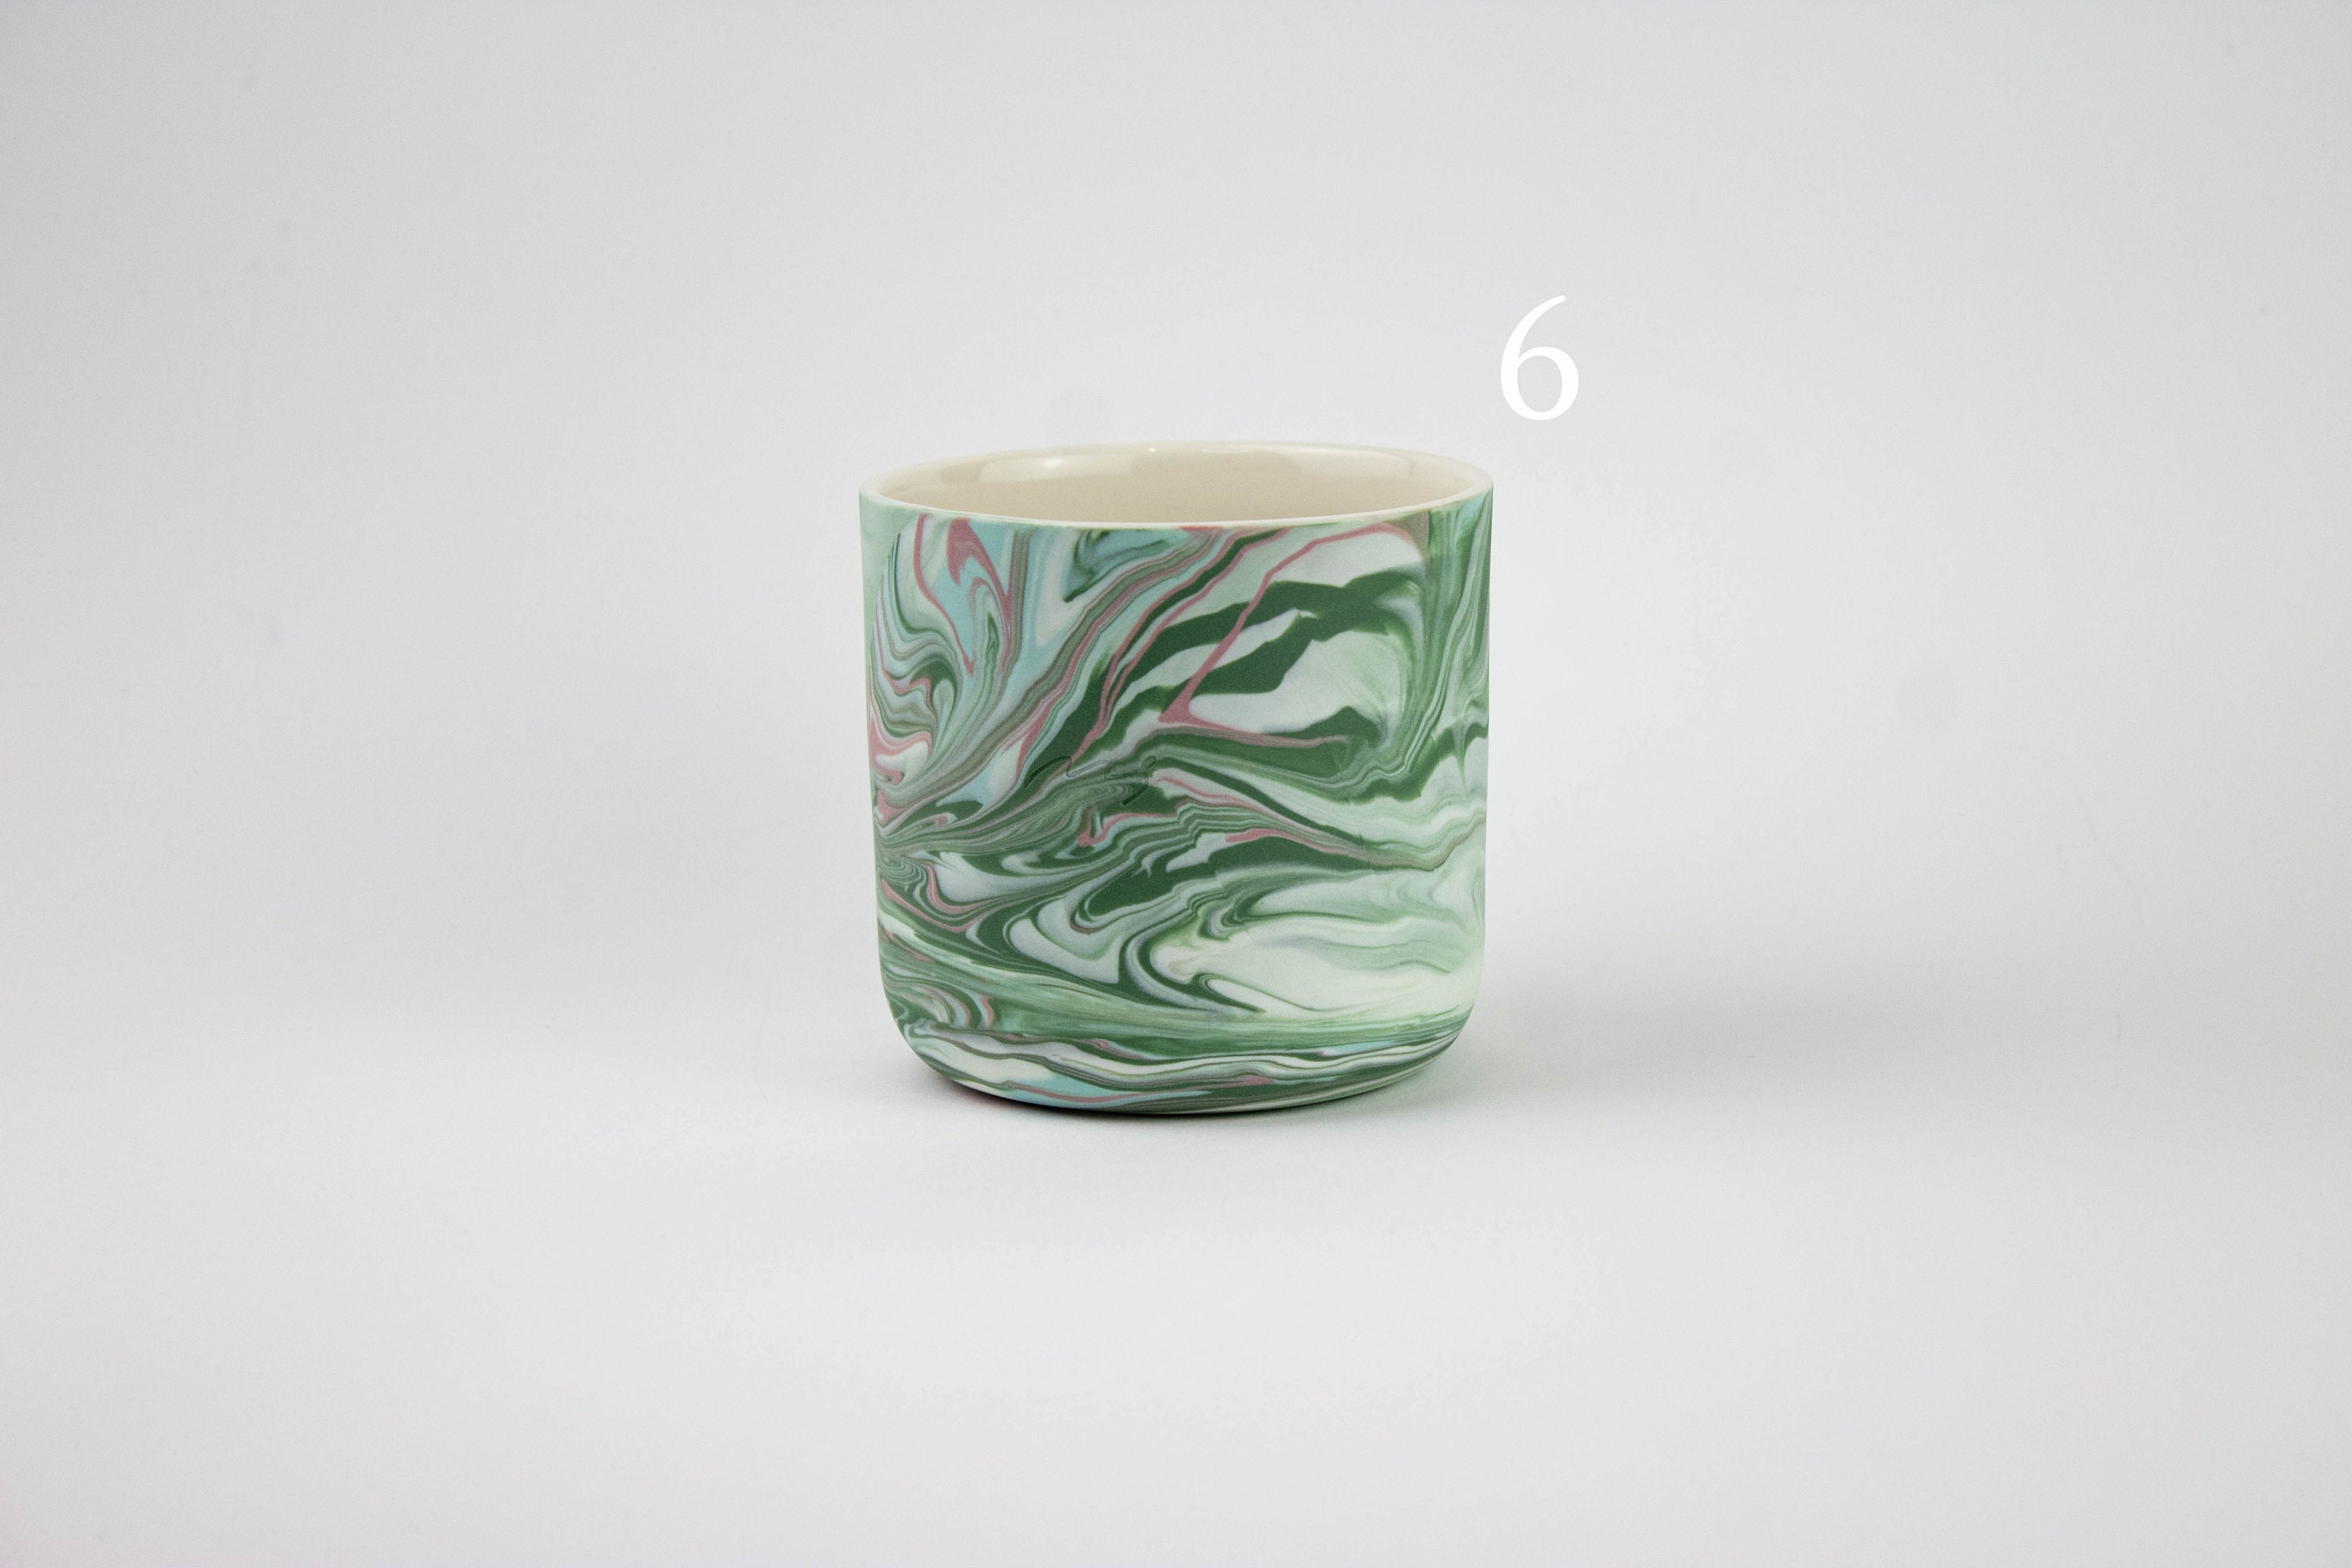 Marbled Ceramic Espresso Mug Set of 3 by World Market